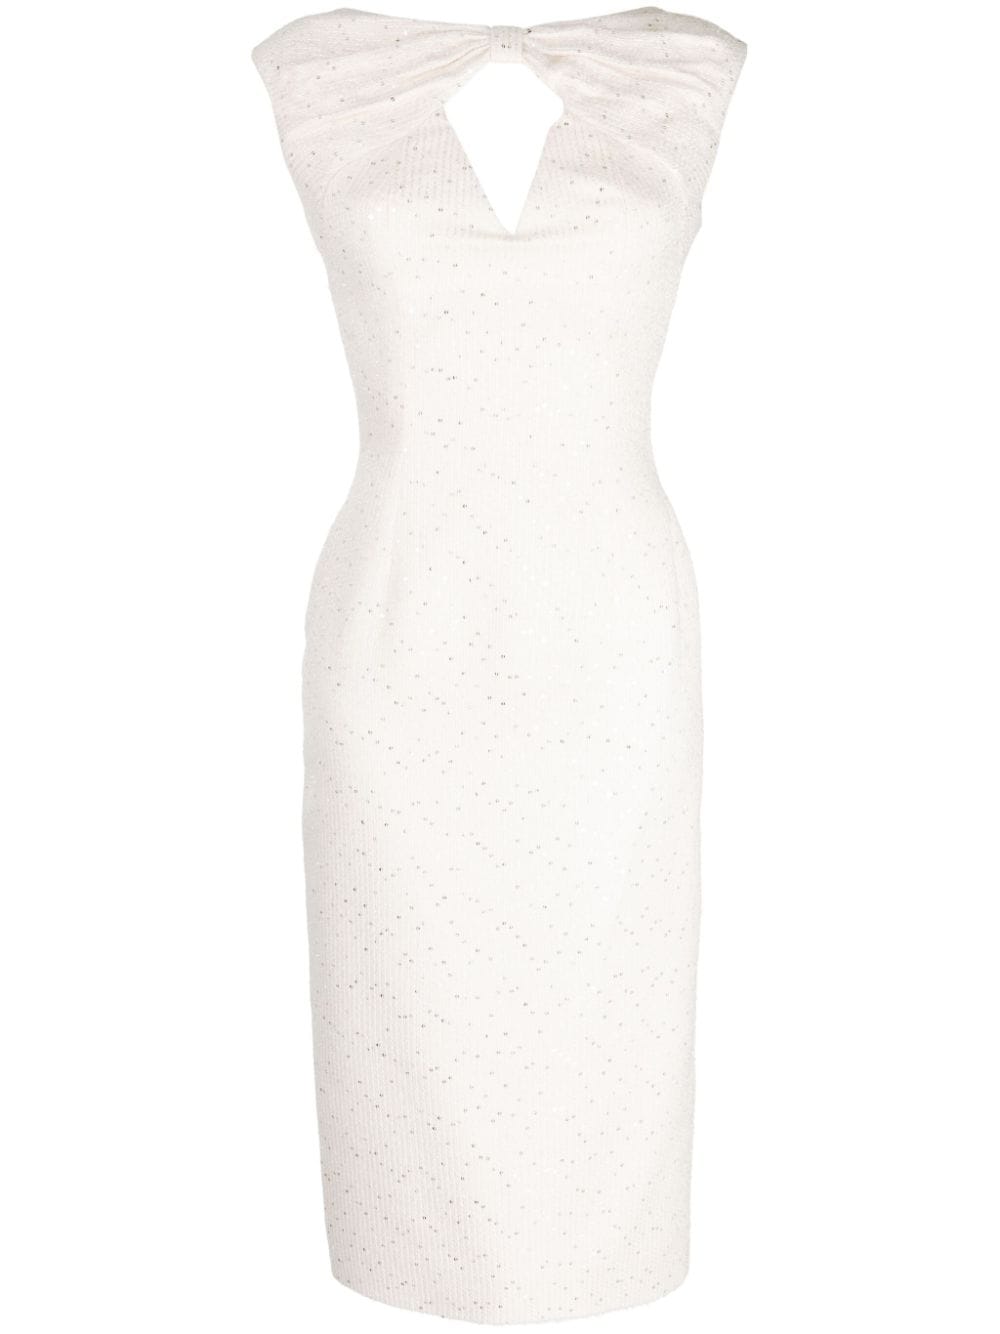 Saiid Kobeisy Sequin-embellished Tweed Midi Dress In White